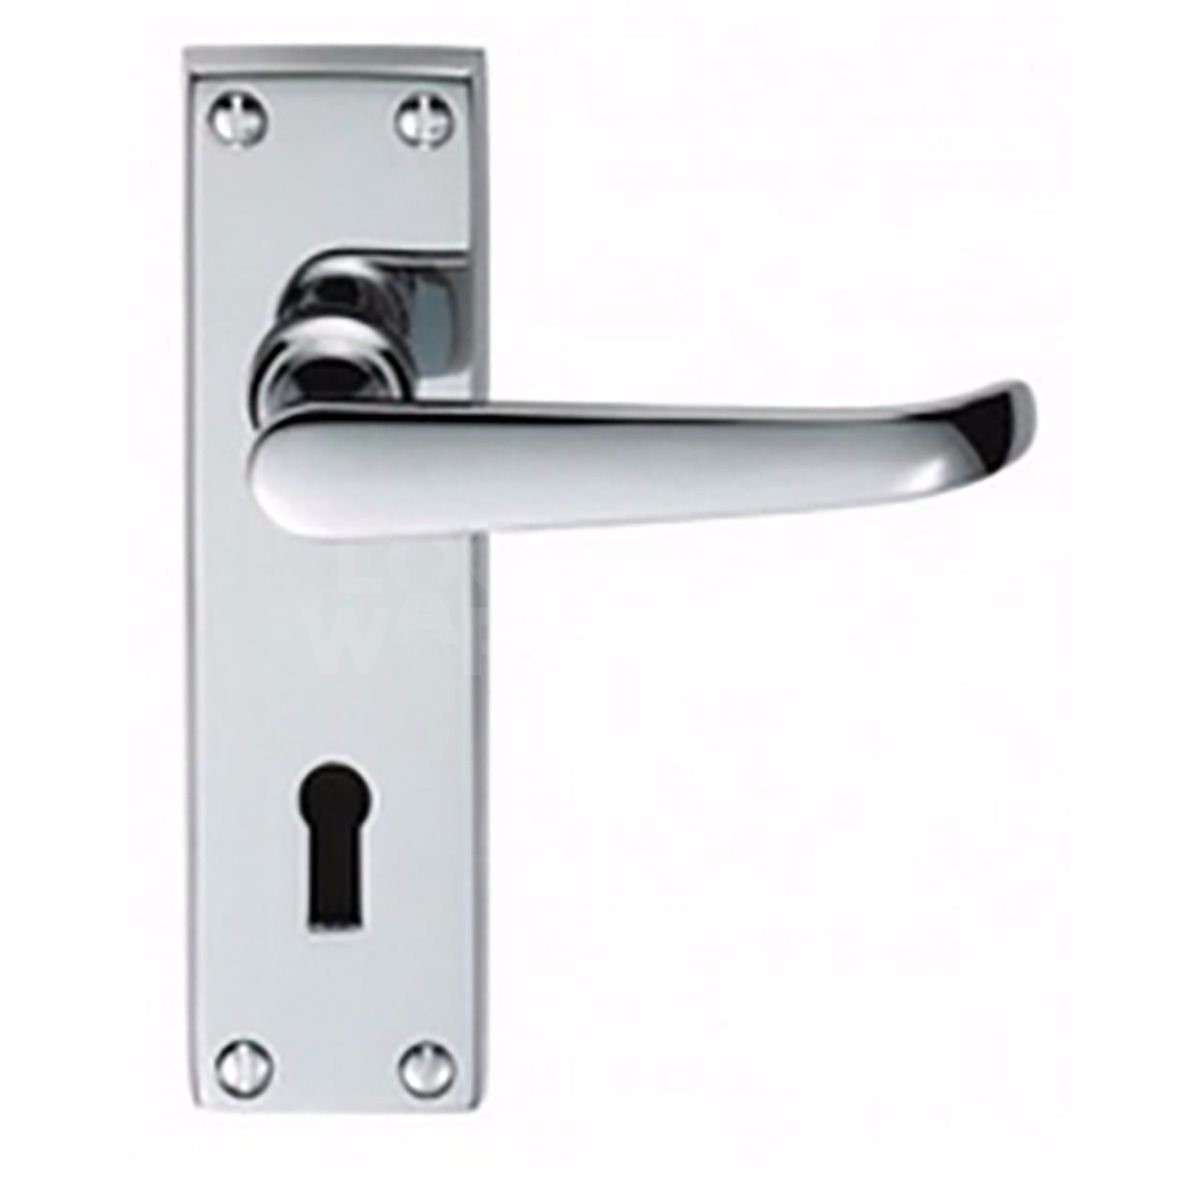 Chrome Lever Lock handles